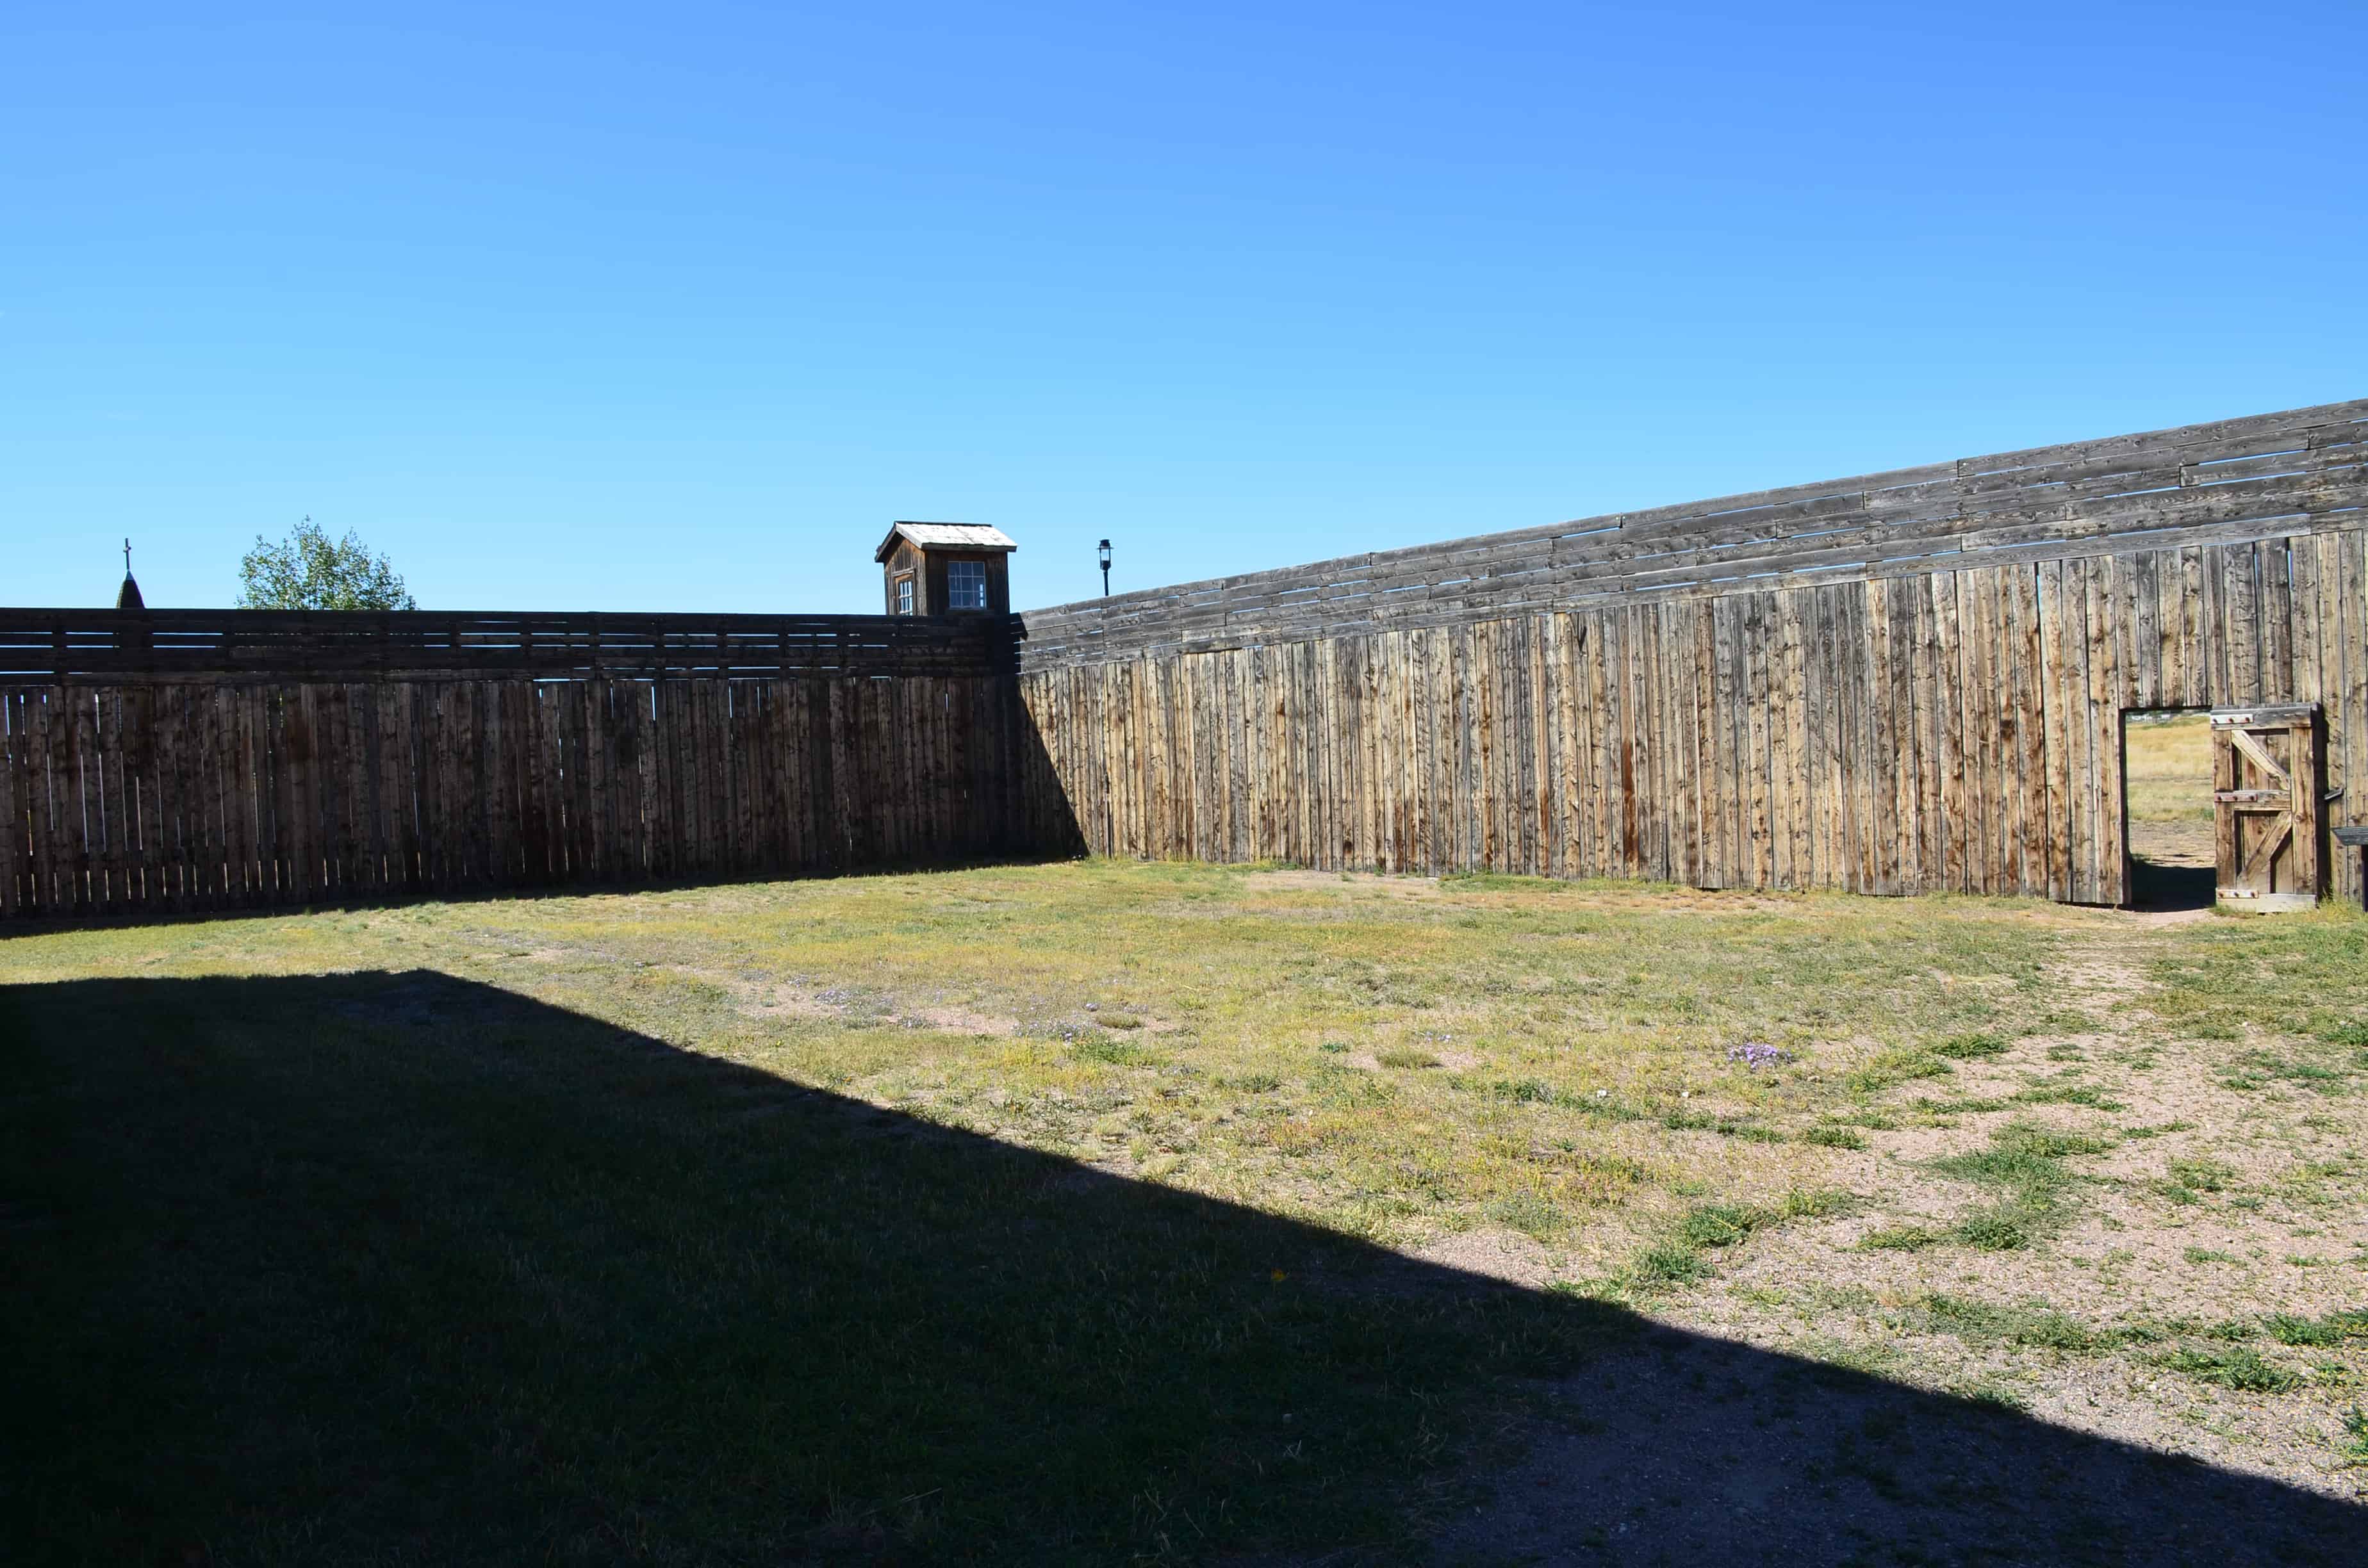 Yard at Wyoming Territorial Prison State Historic Site in Laramie